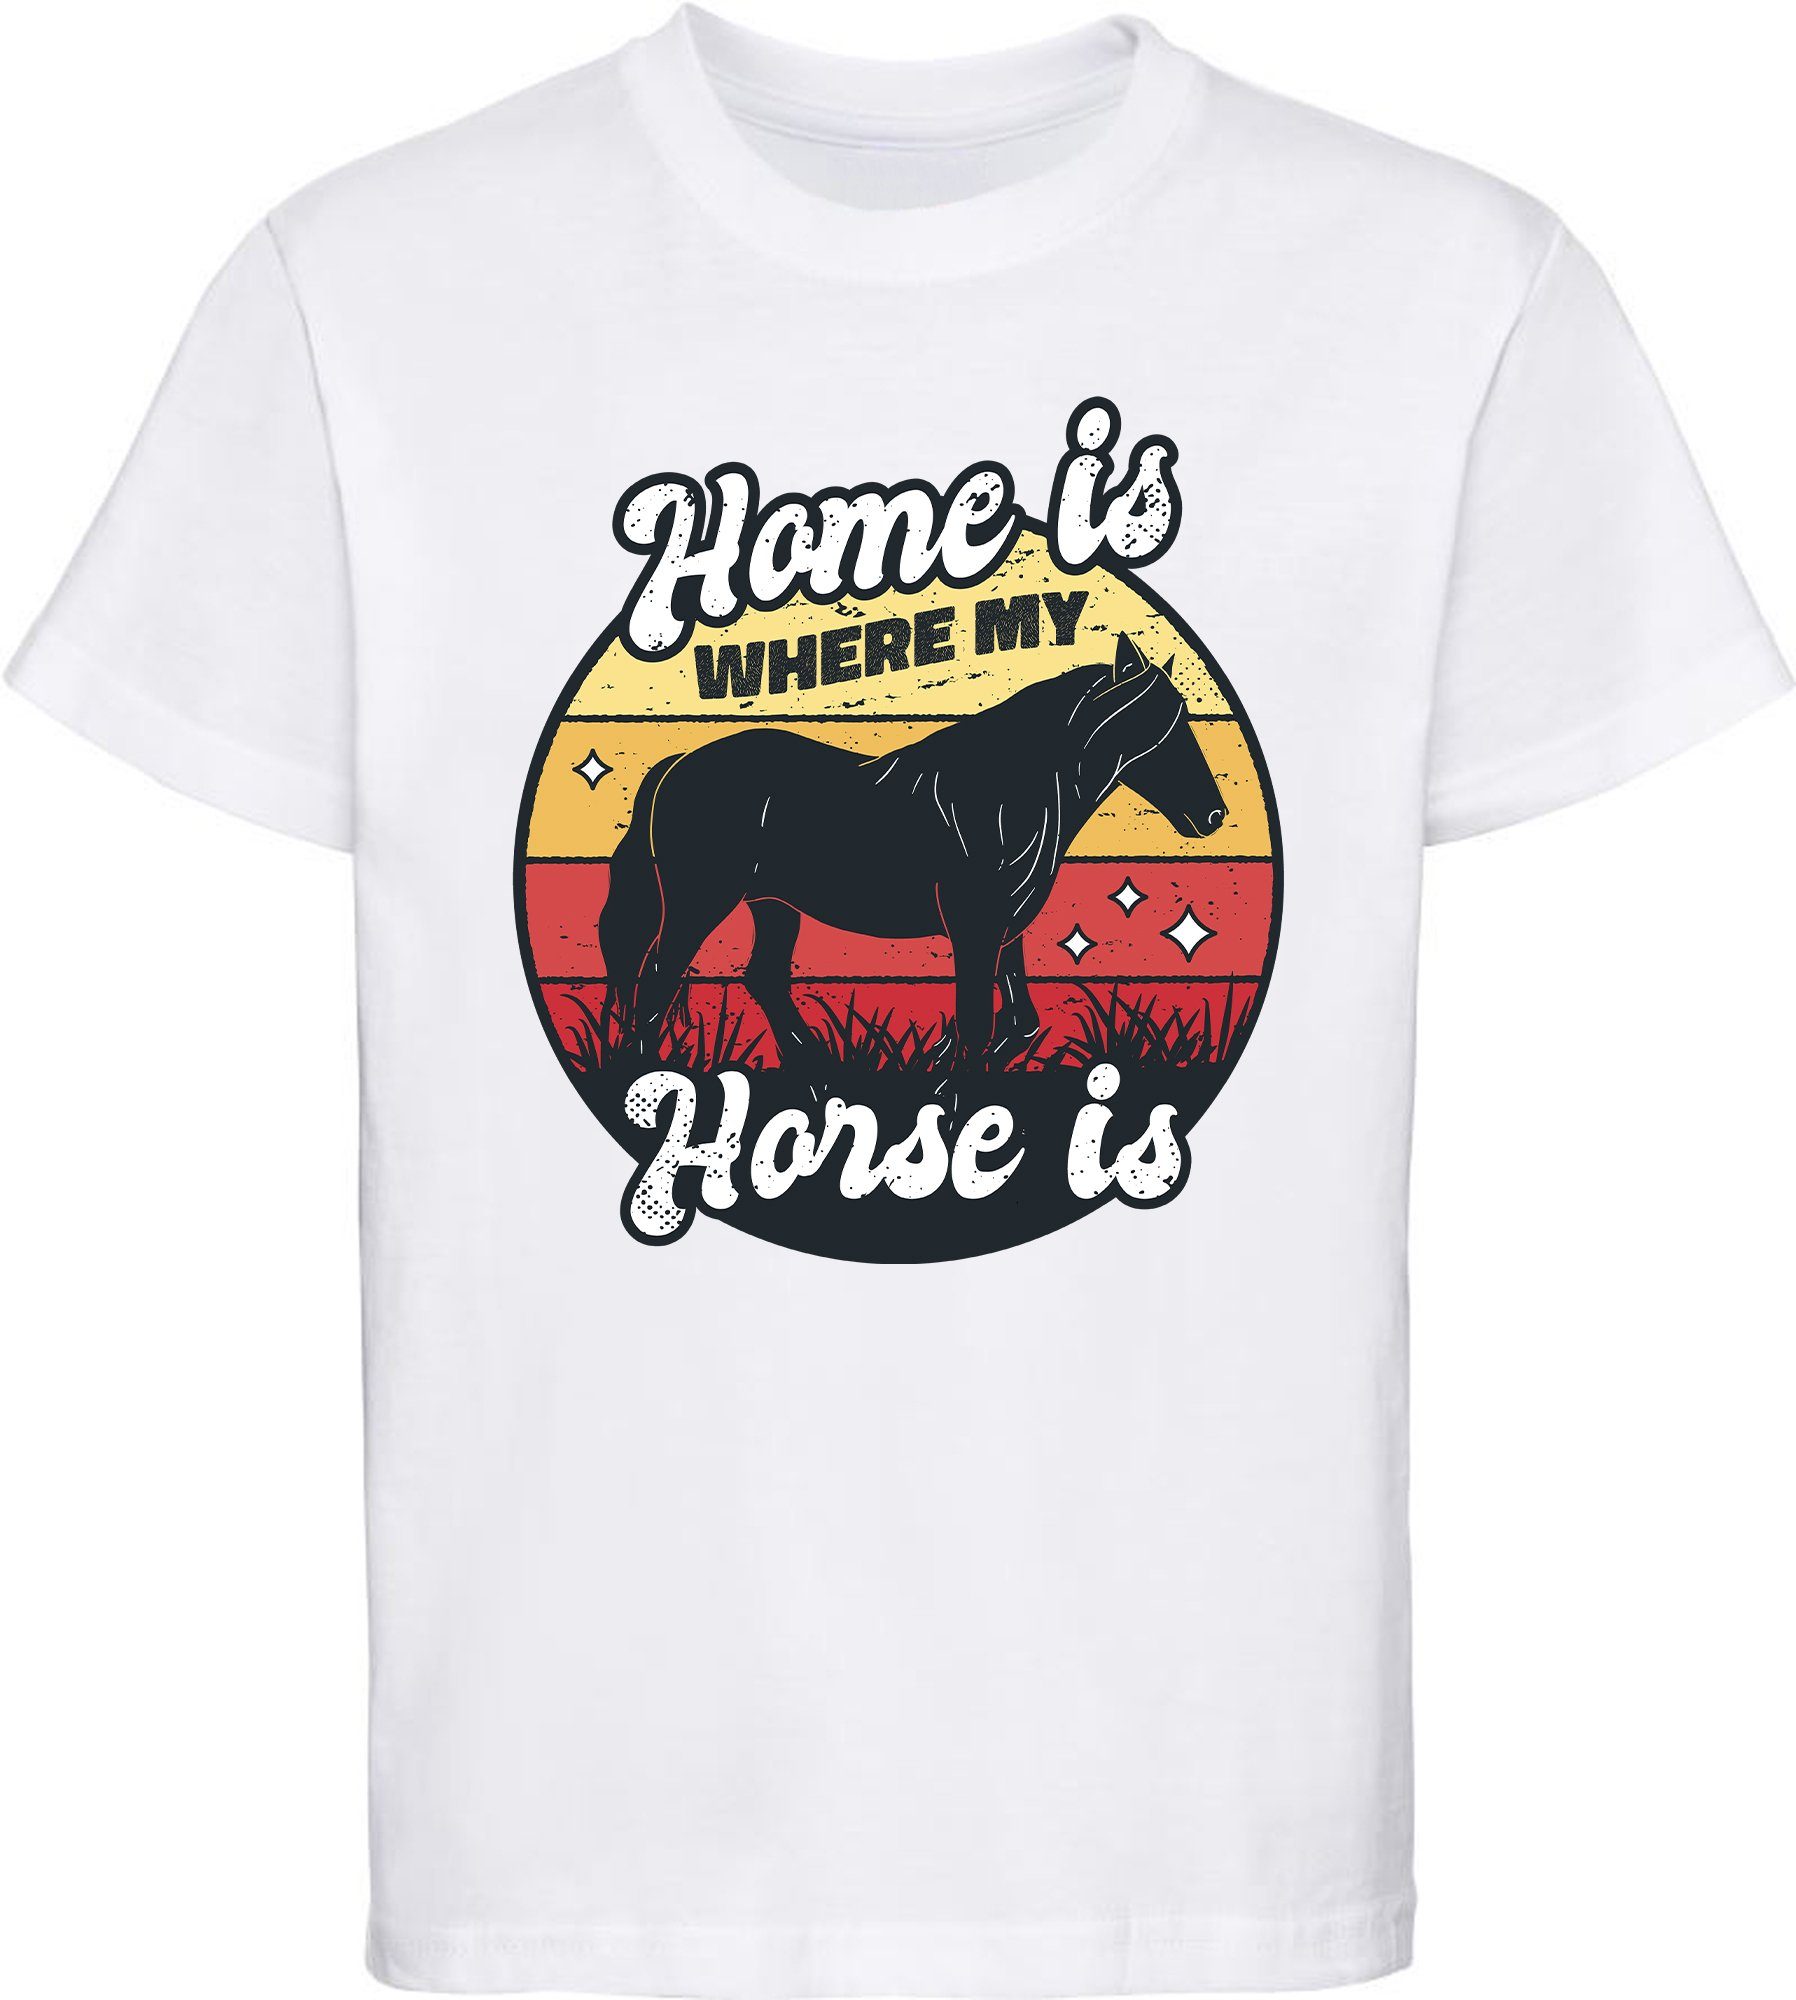 Mädchen Print-Shirt Baumwollshirt where my is MyDesign24 Aufdruck, bedrucktes weiss - is i156 horse Home T-Shirt mit